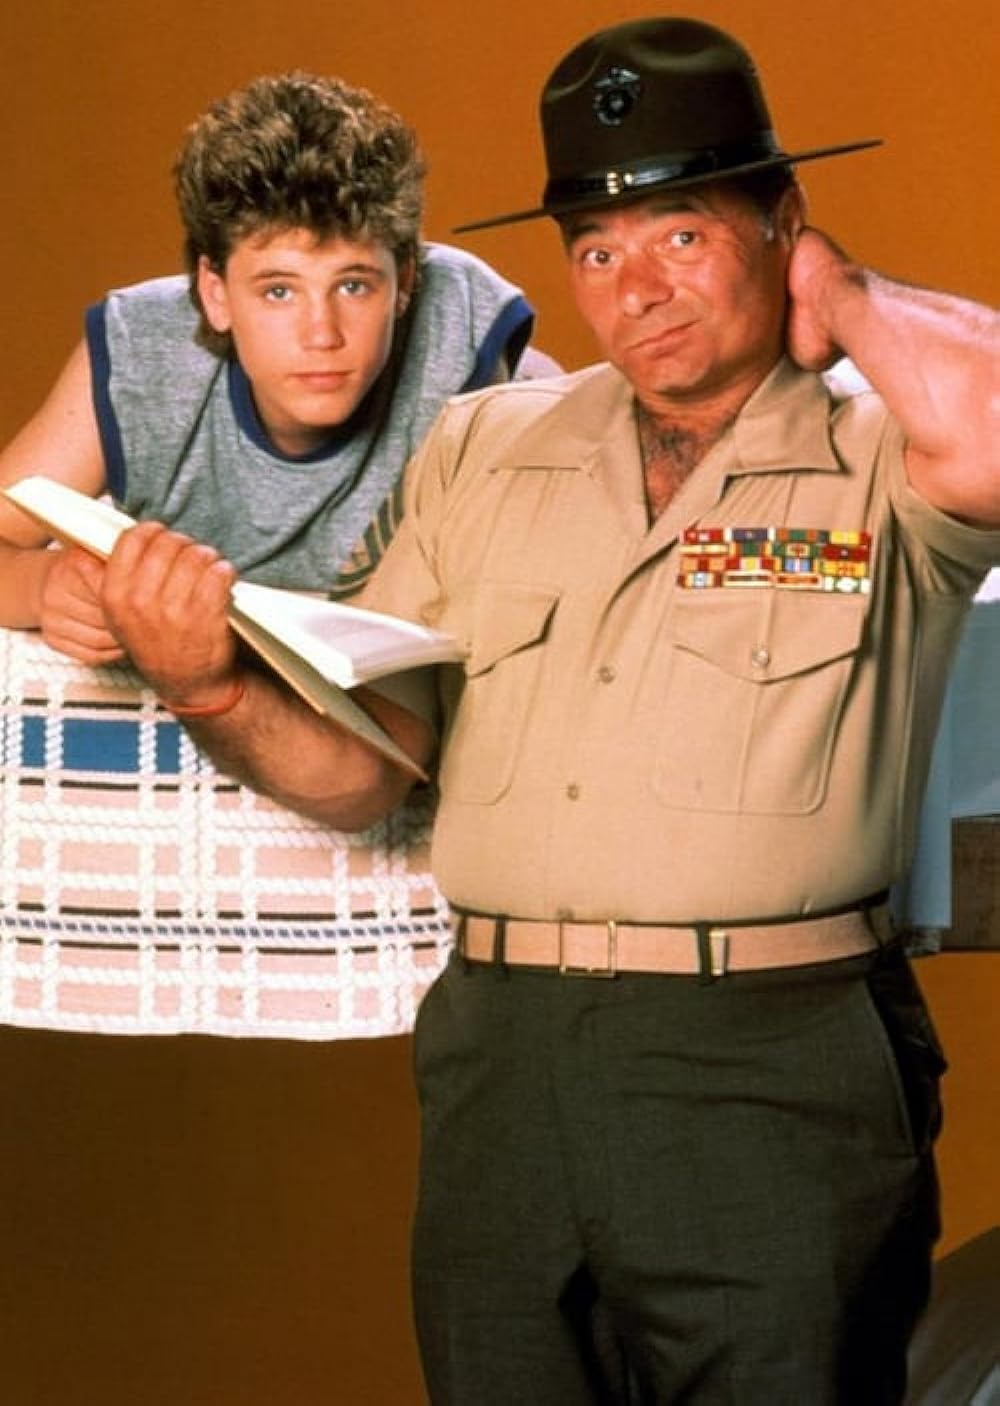 Burt Young in the TV series Roomies with Corey Haim.